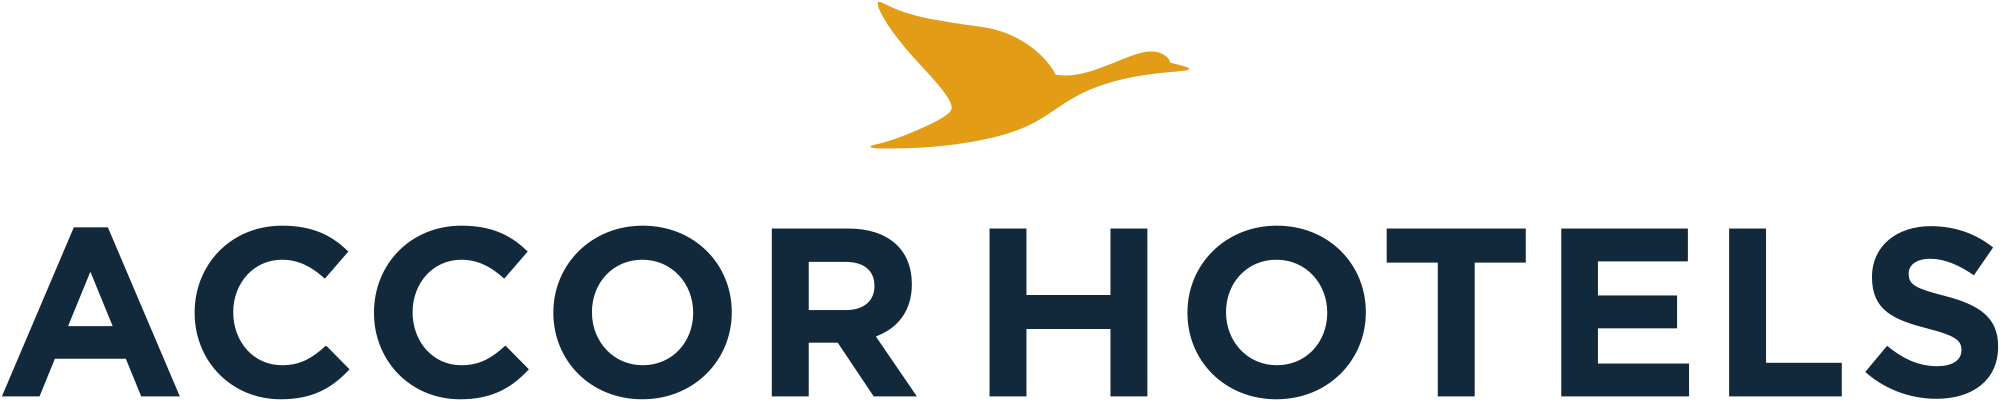 Accor Hotel Group Logo (2000x400)